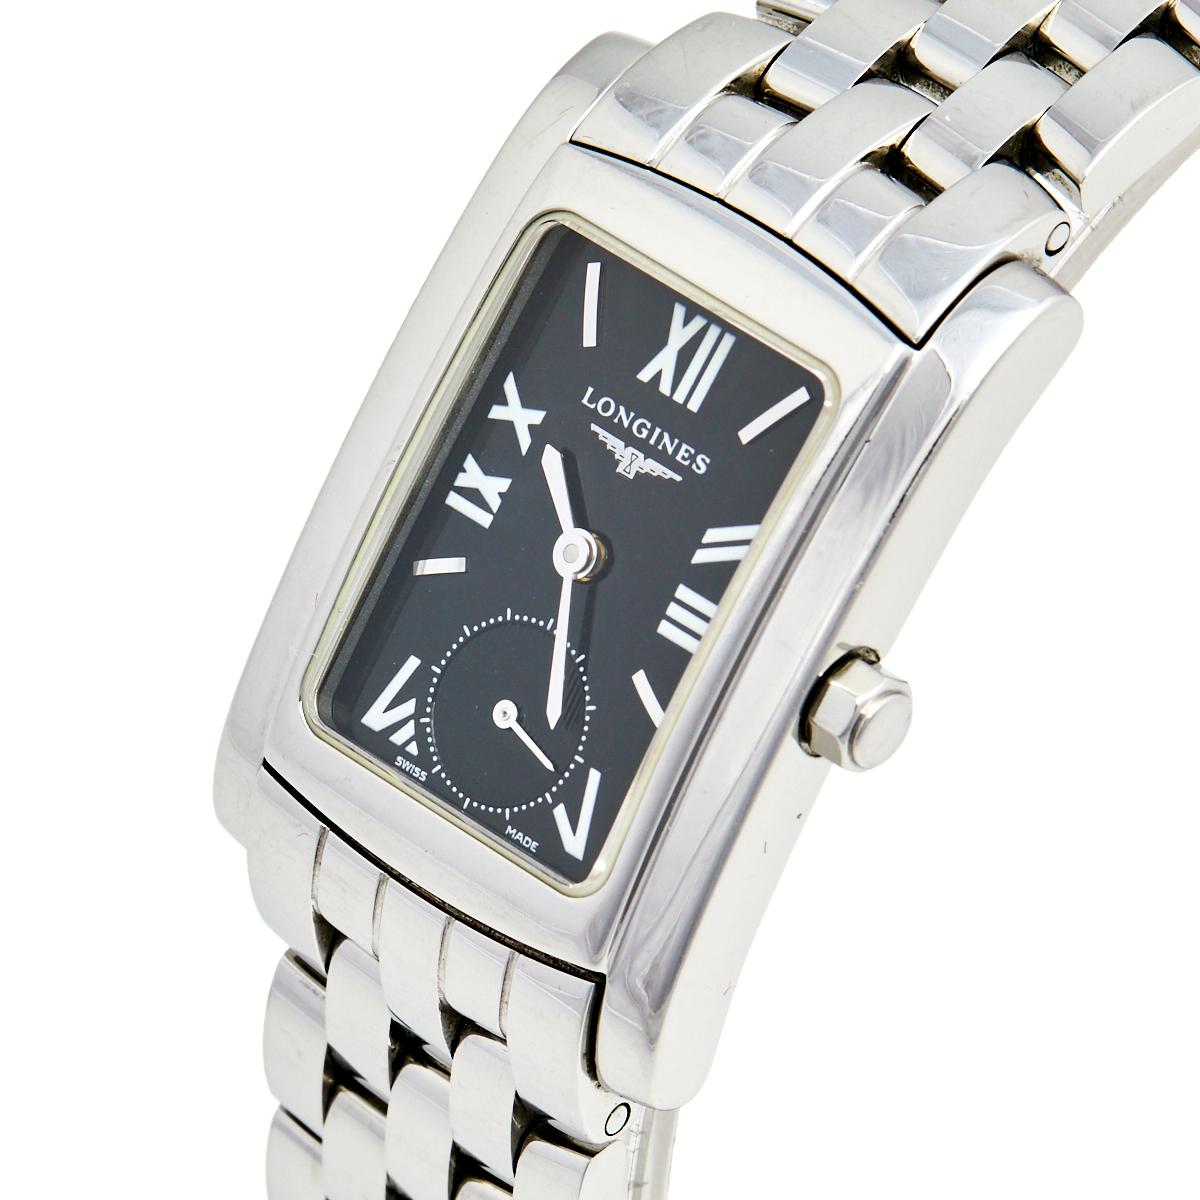 

Longines Black Stainless Steel Dolce Vita L5.502.4 Women's Wristwatch